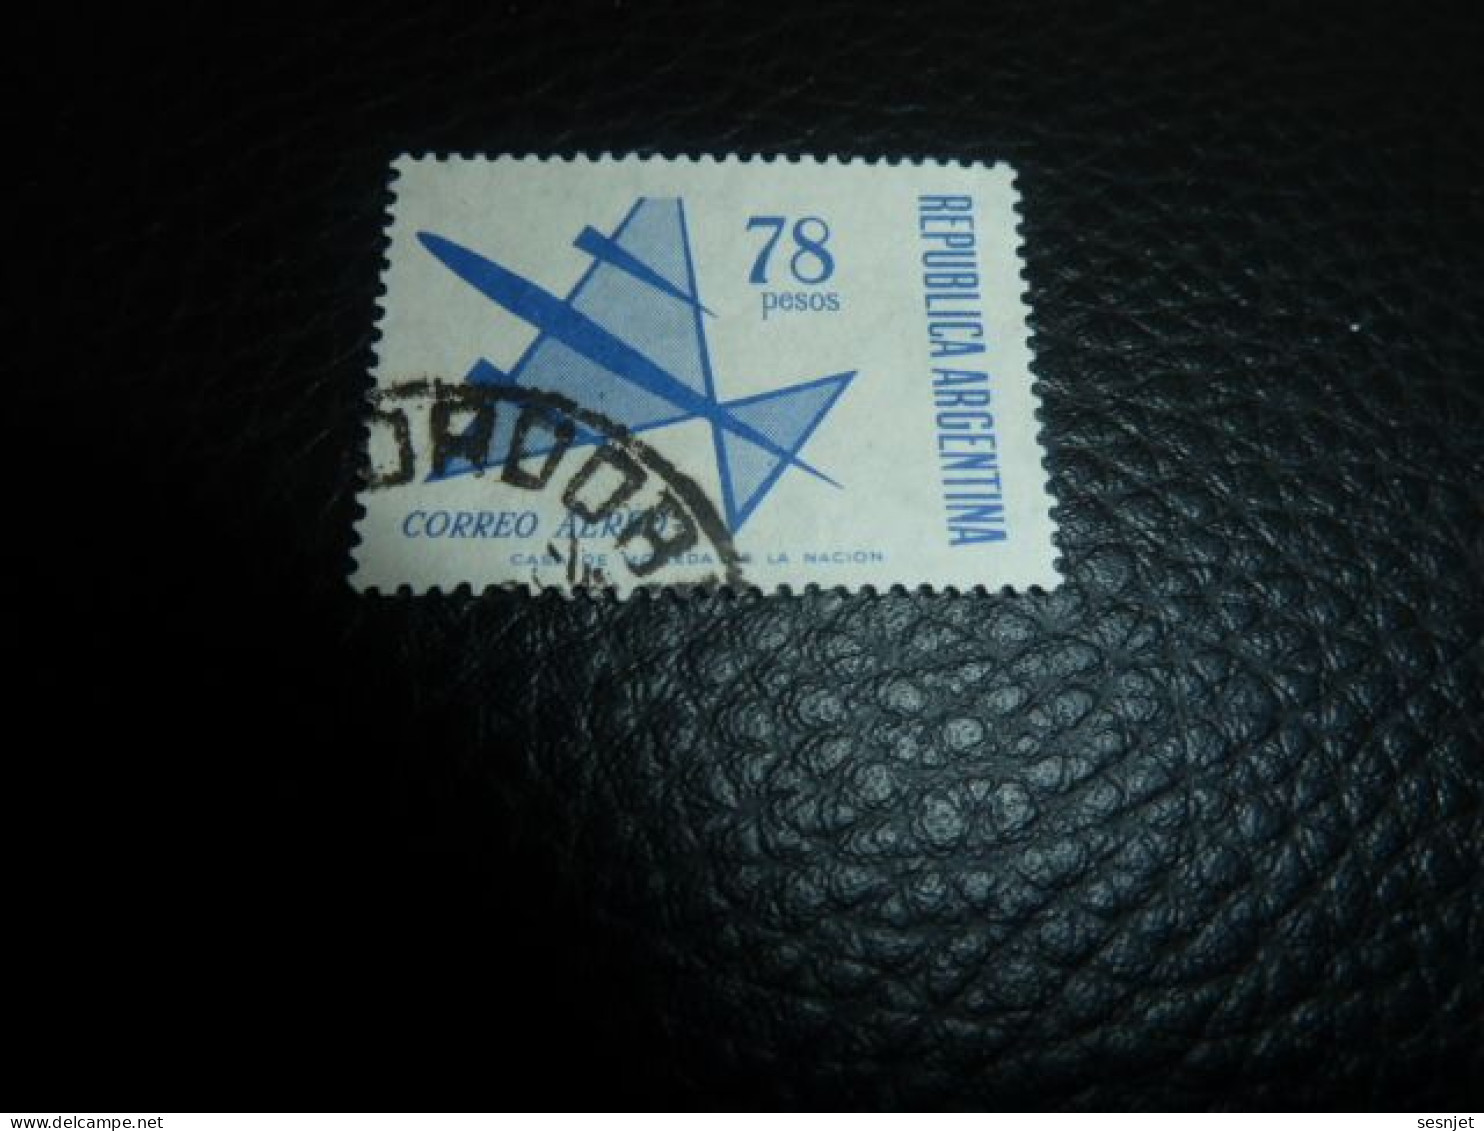 Republica Argentina - Correo Aereo - 78 Pesos - Yt 121 - Outremer - Oblitéré - Année 1968 - - Used Stamps